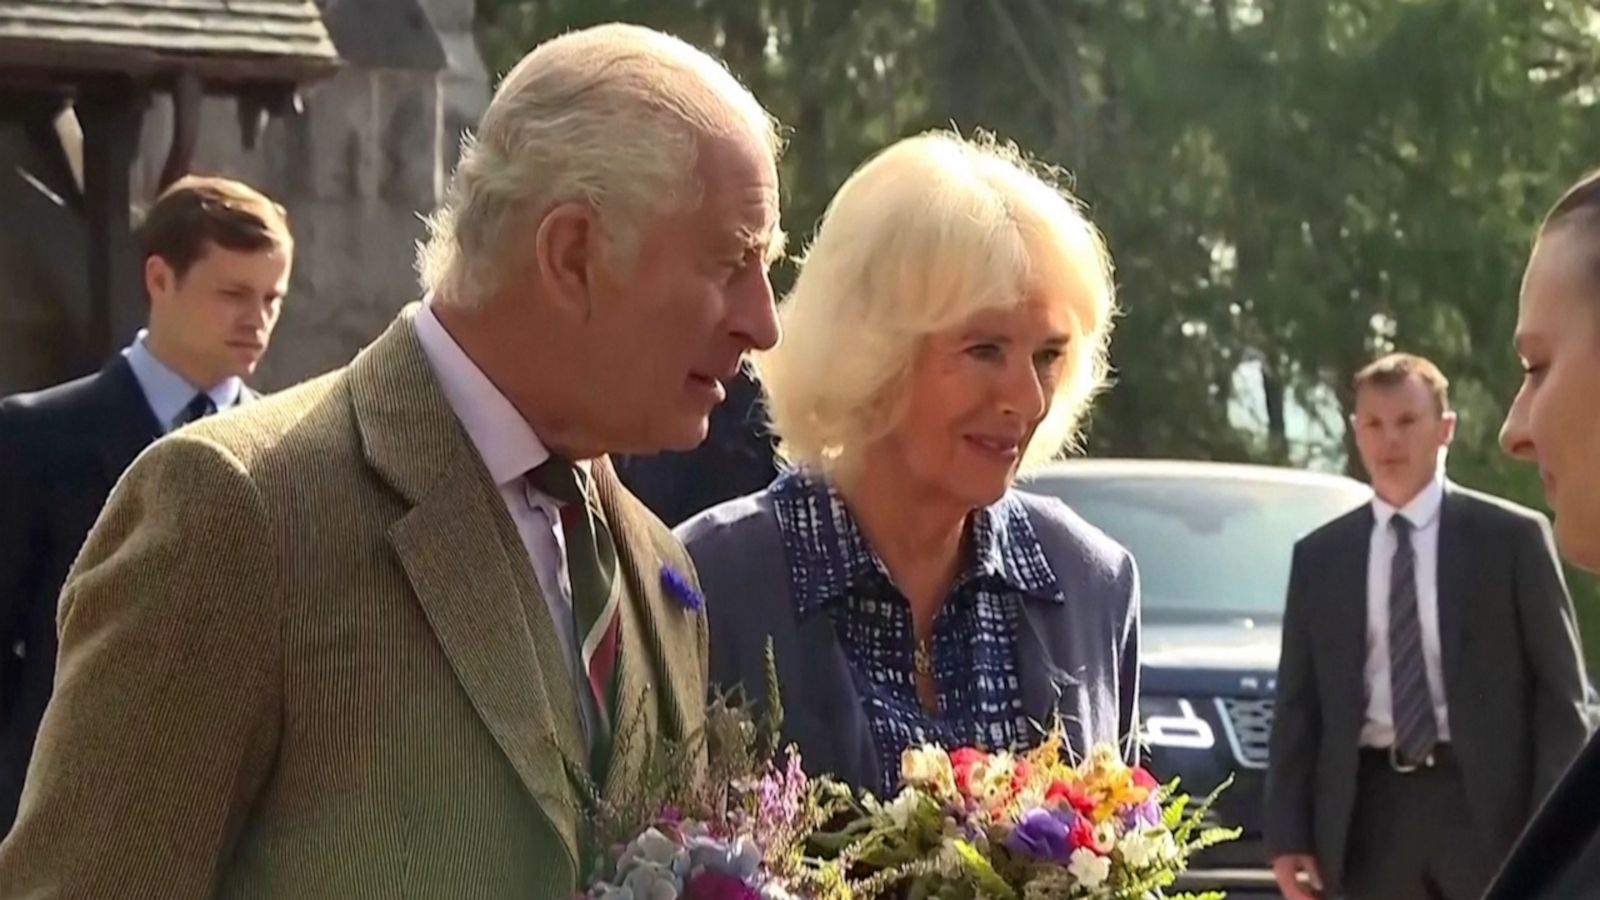 VIDEO: King Charles III attends service marking 1 year since Queen Elizabeth II's death